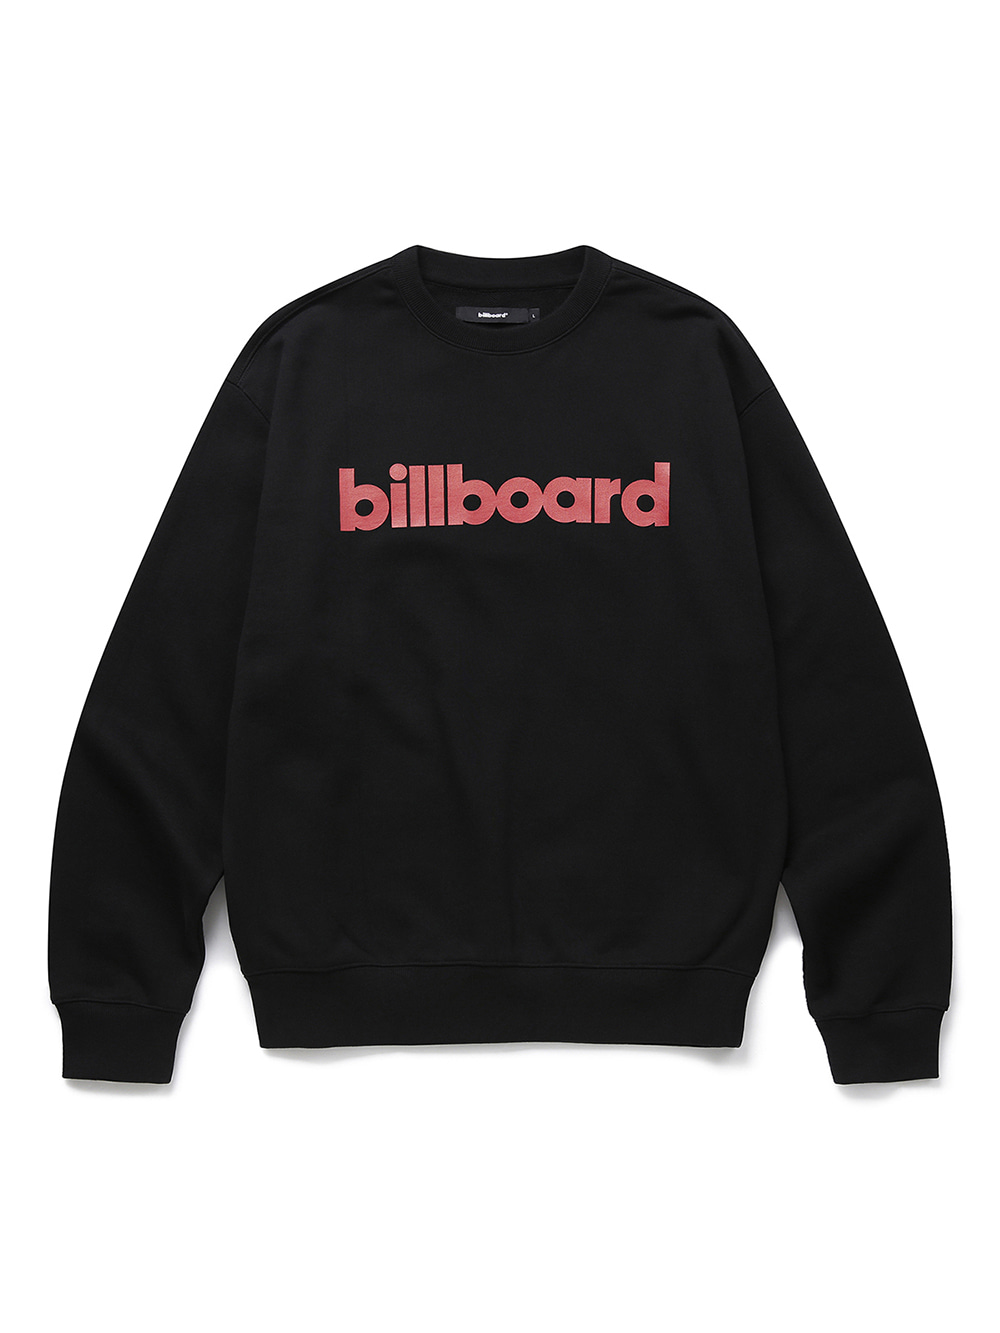 Billboard Global Label Sweatshirt_Black